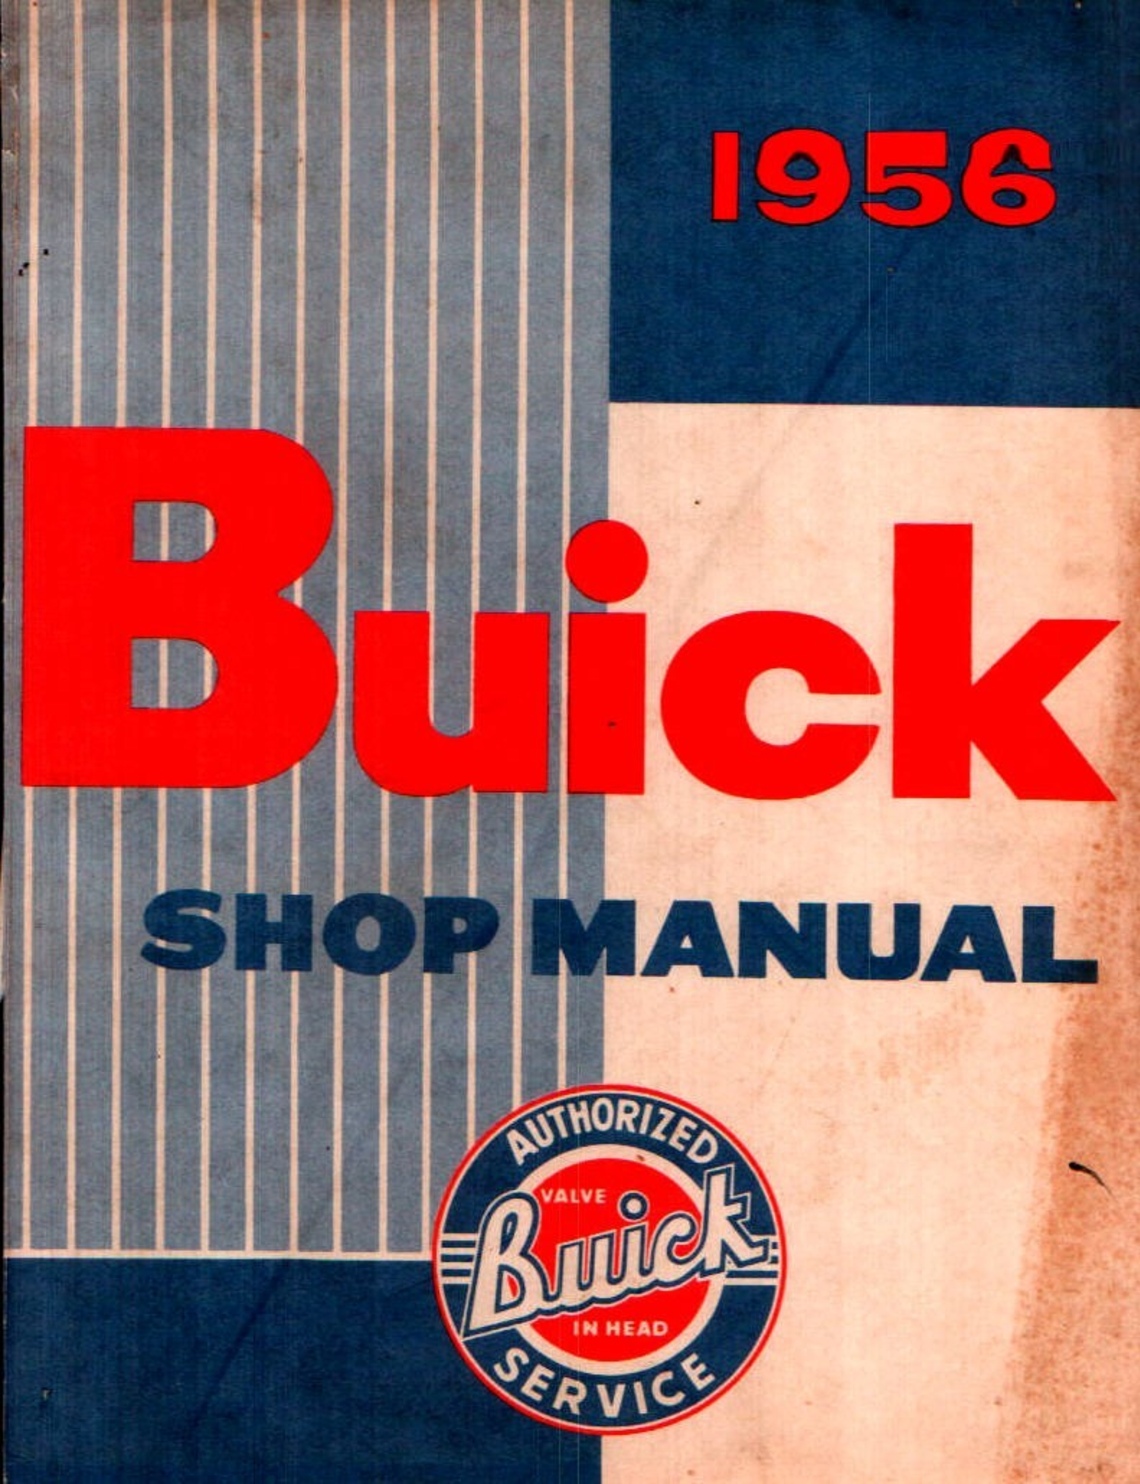 n_01 1956 Buick Shop Manual - Gen Information-001-001.jpg